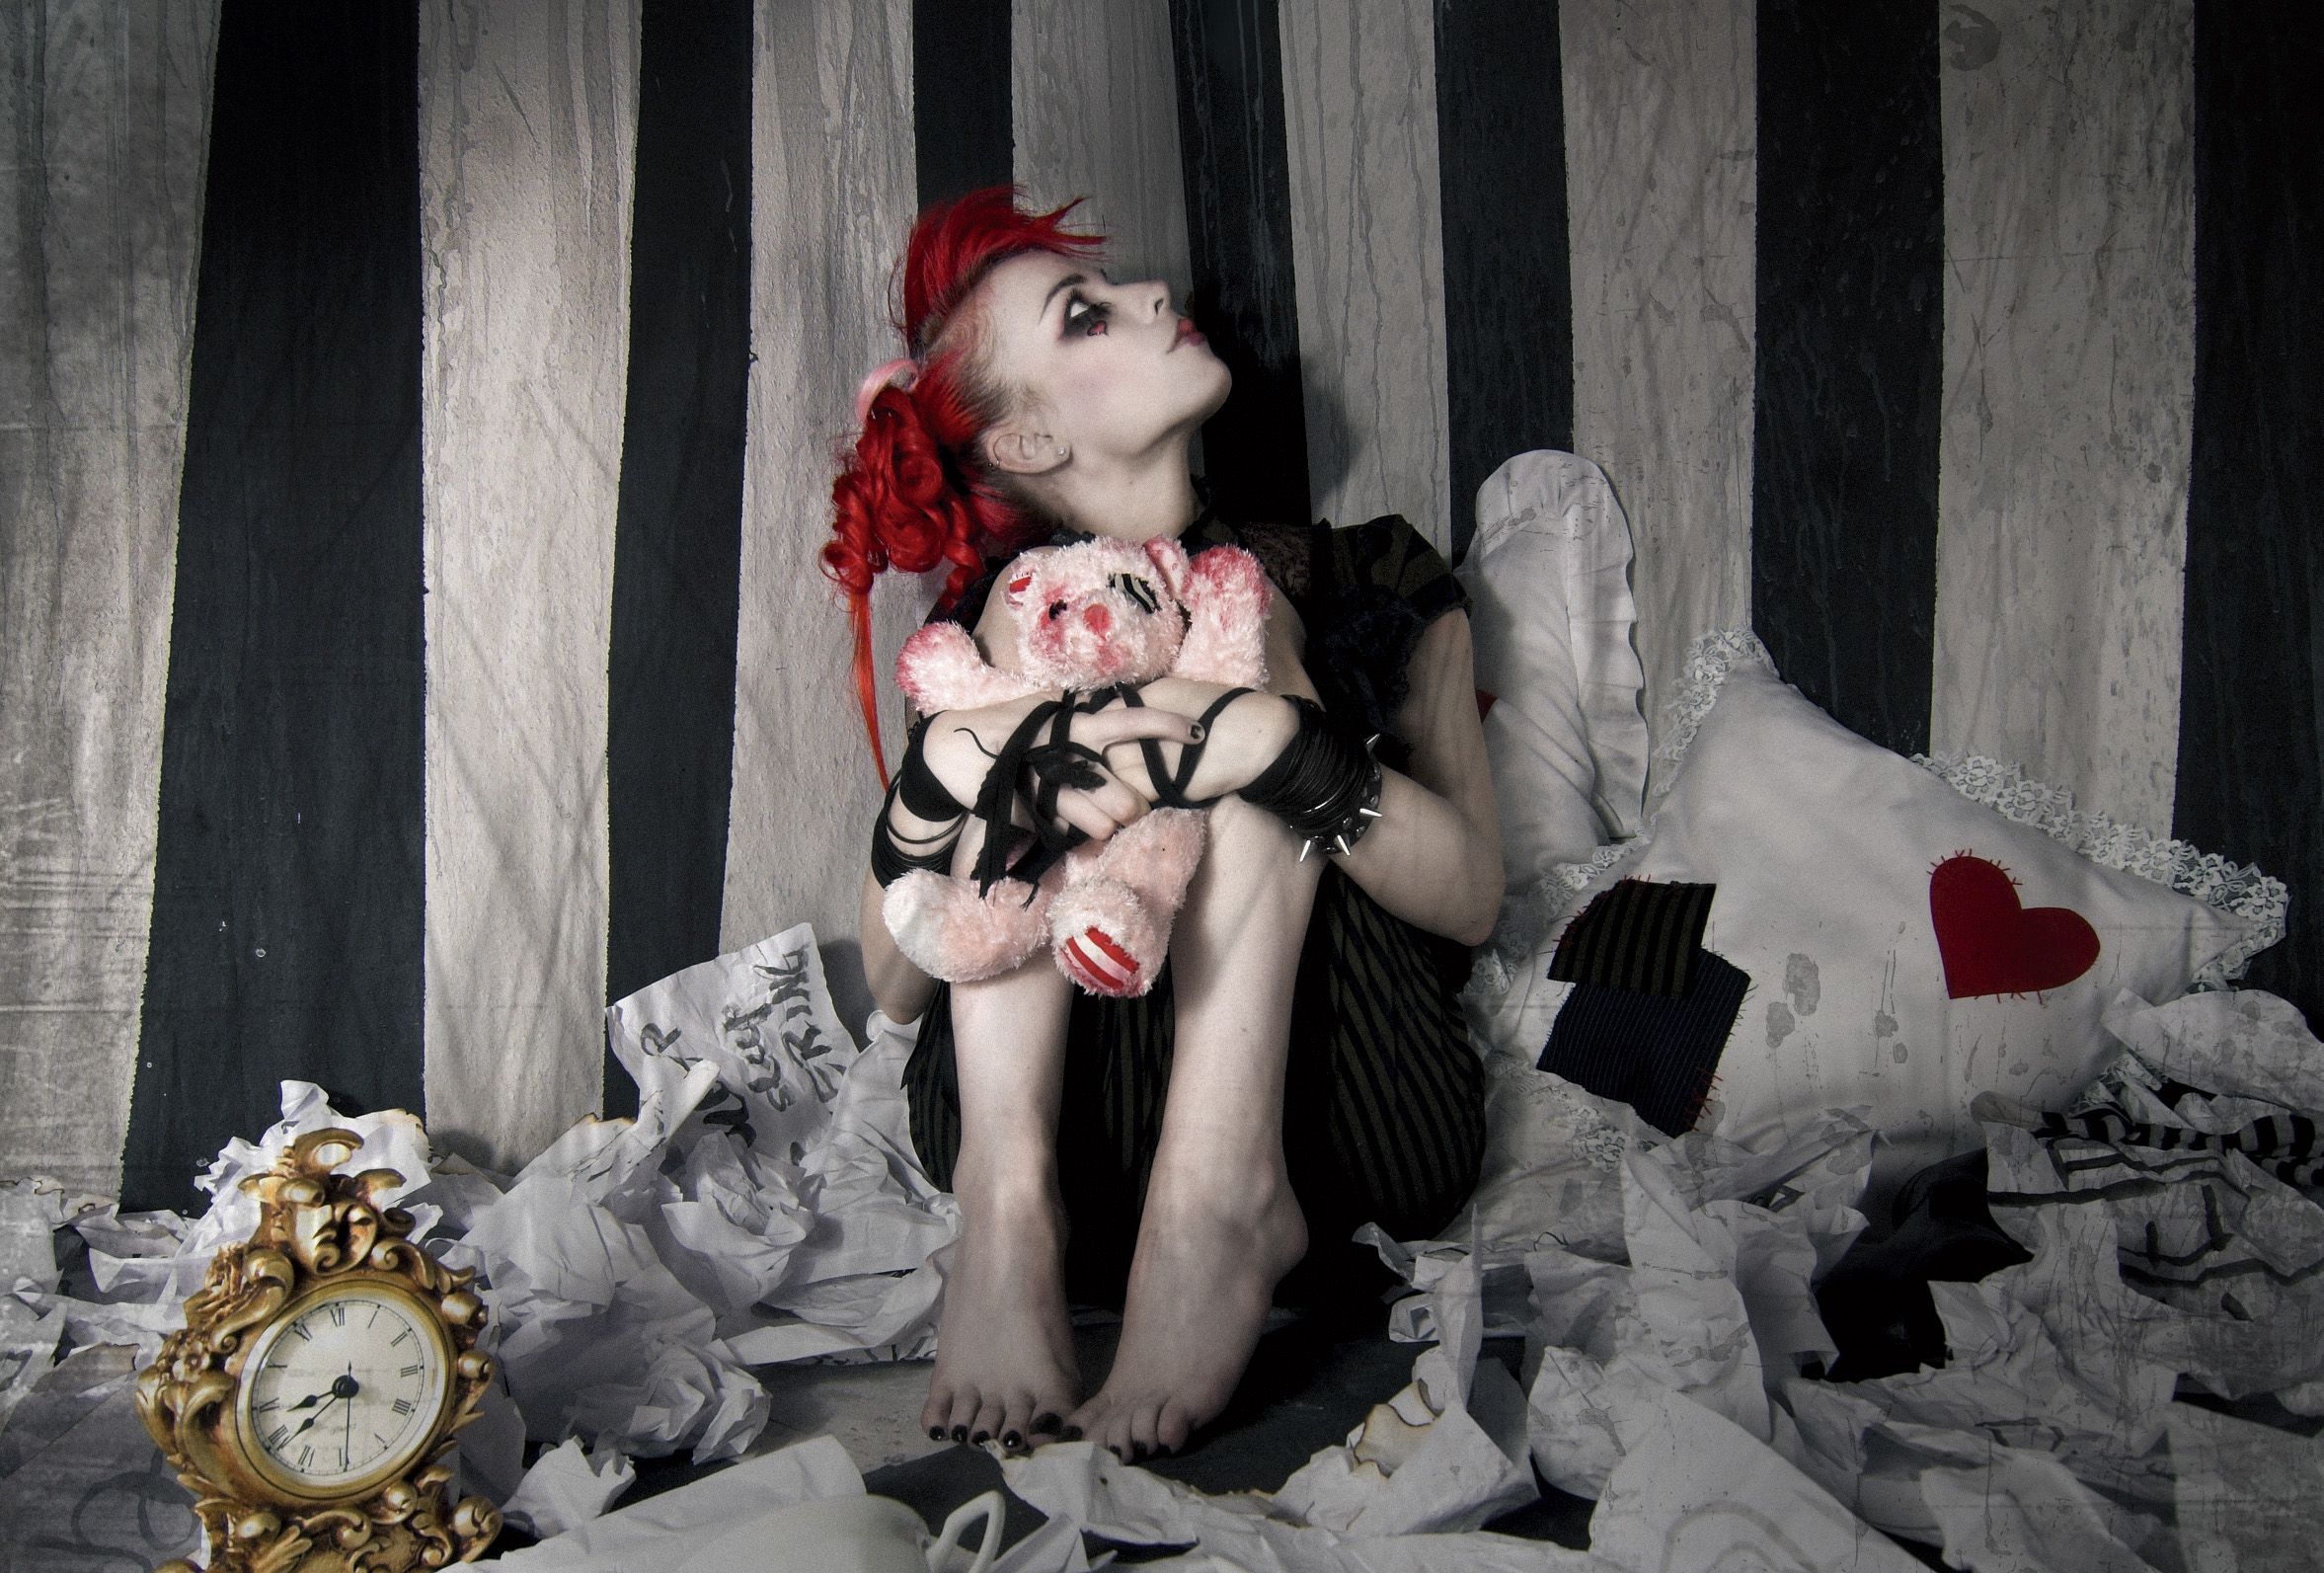 Emilie Autumn Wallpaper Background